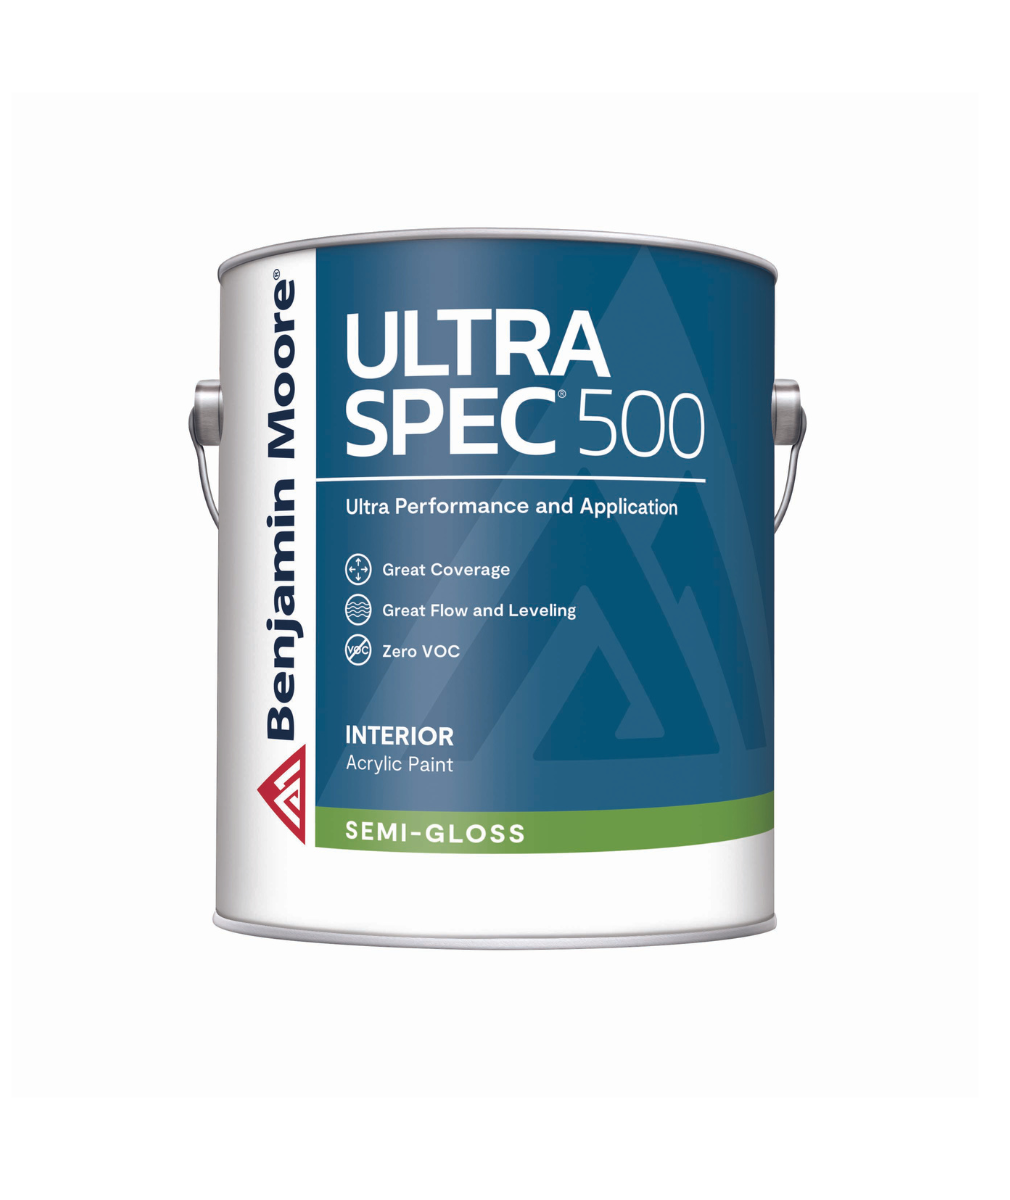 Benjamin Moore Ultra Spec 500 semi-gloss Interior Paint available at JC Licht.